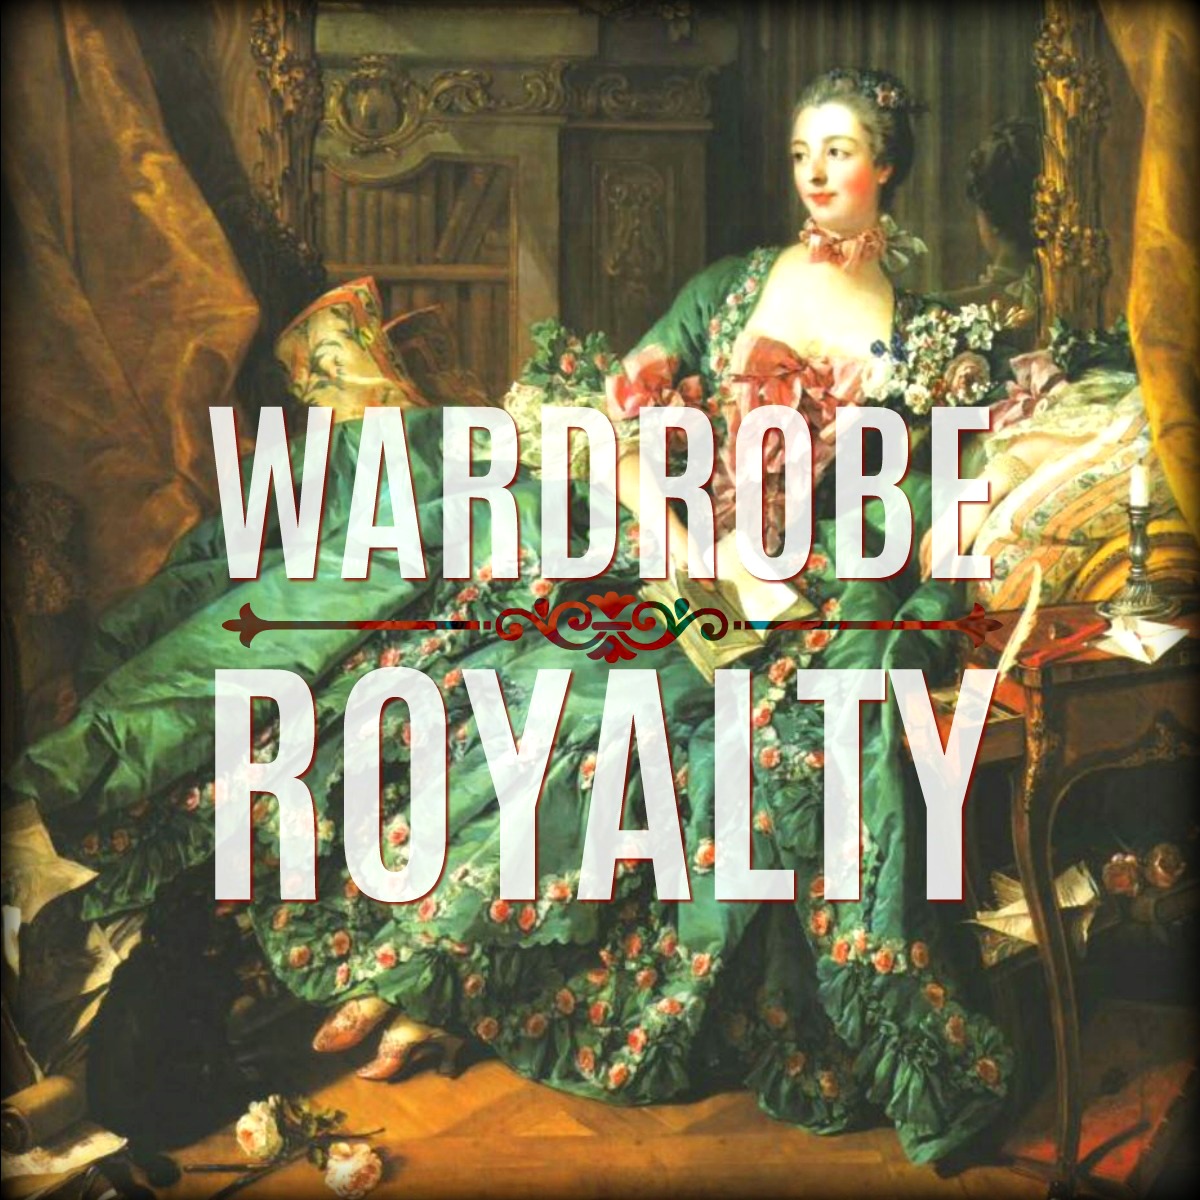 Wardrobe Royalty